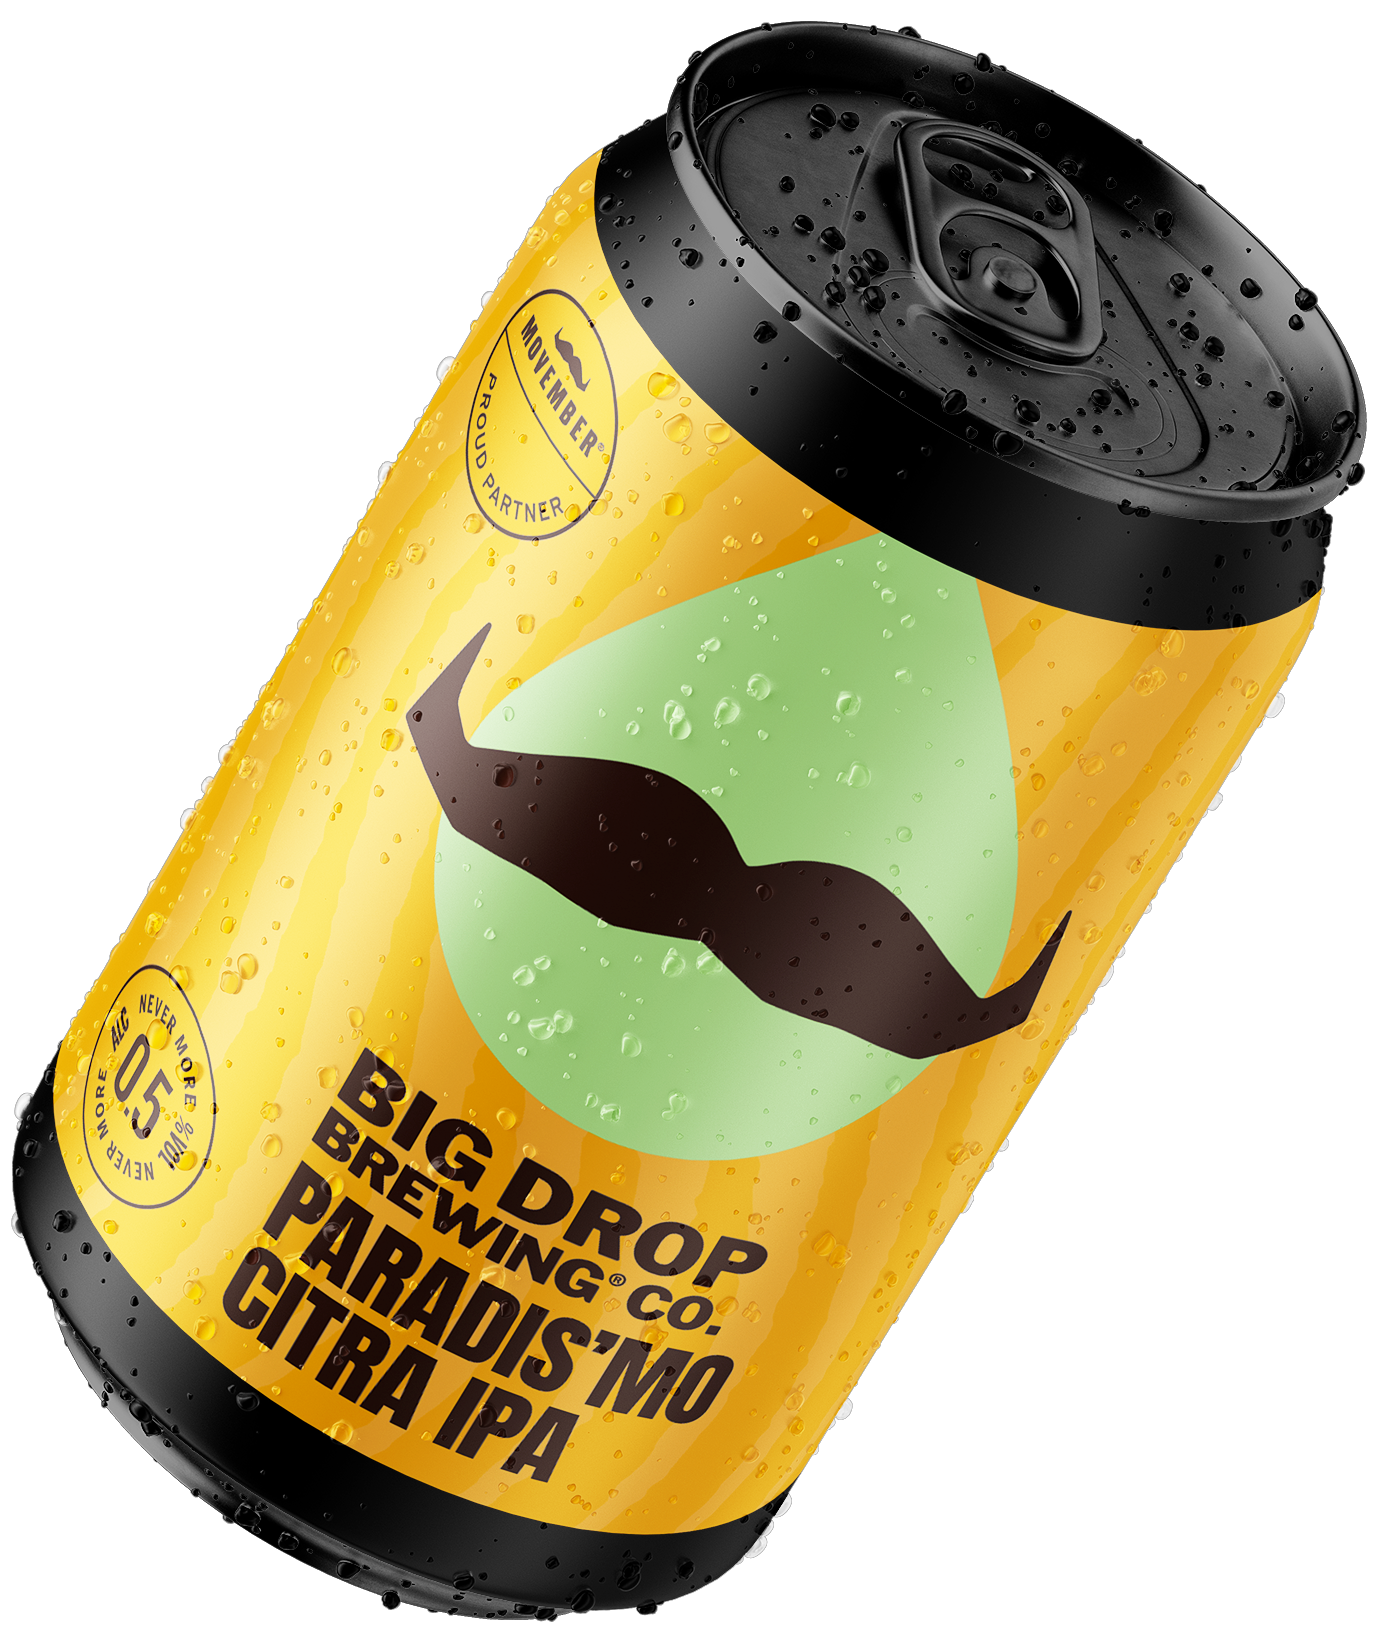 The official AF Beer of Movember